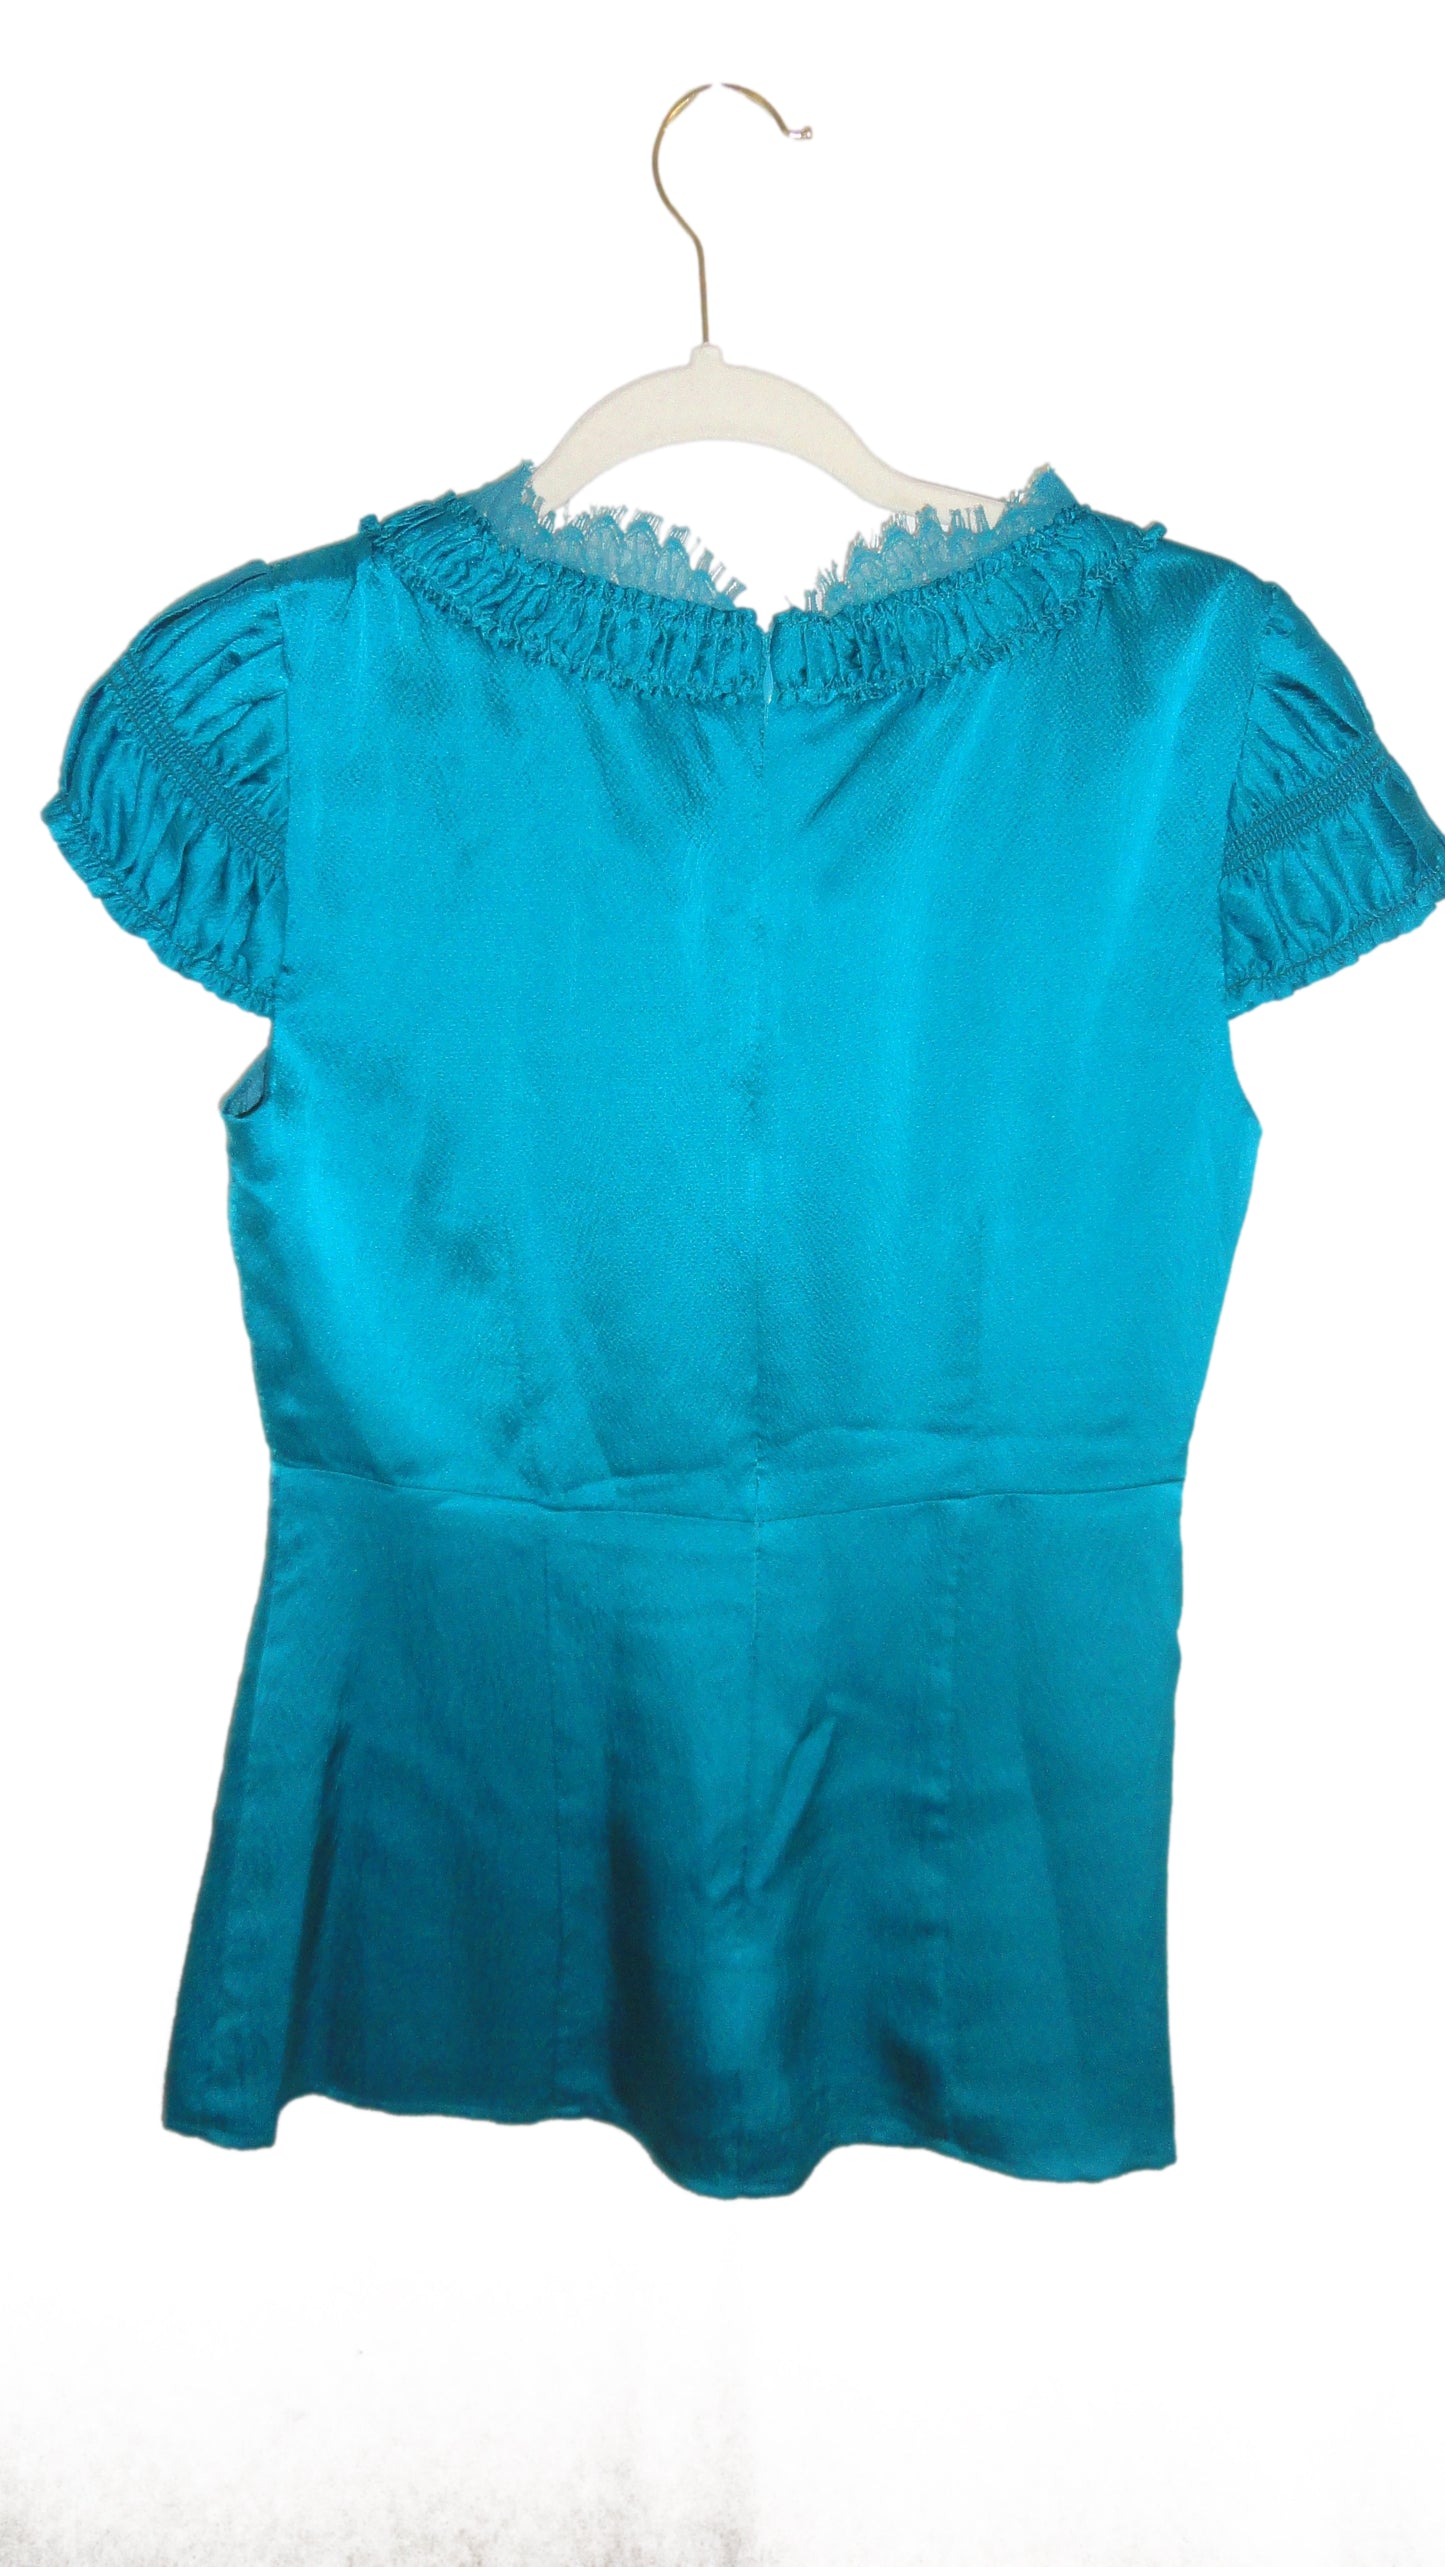 Nanette Lepore Shirt Size 6 SKU 000071